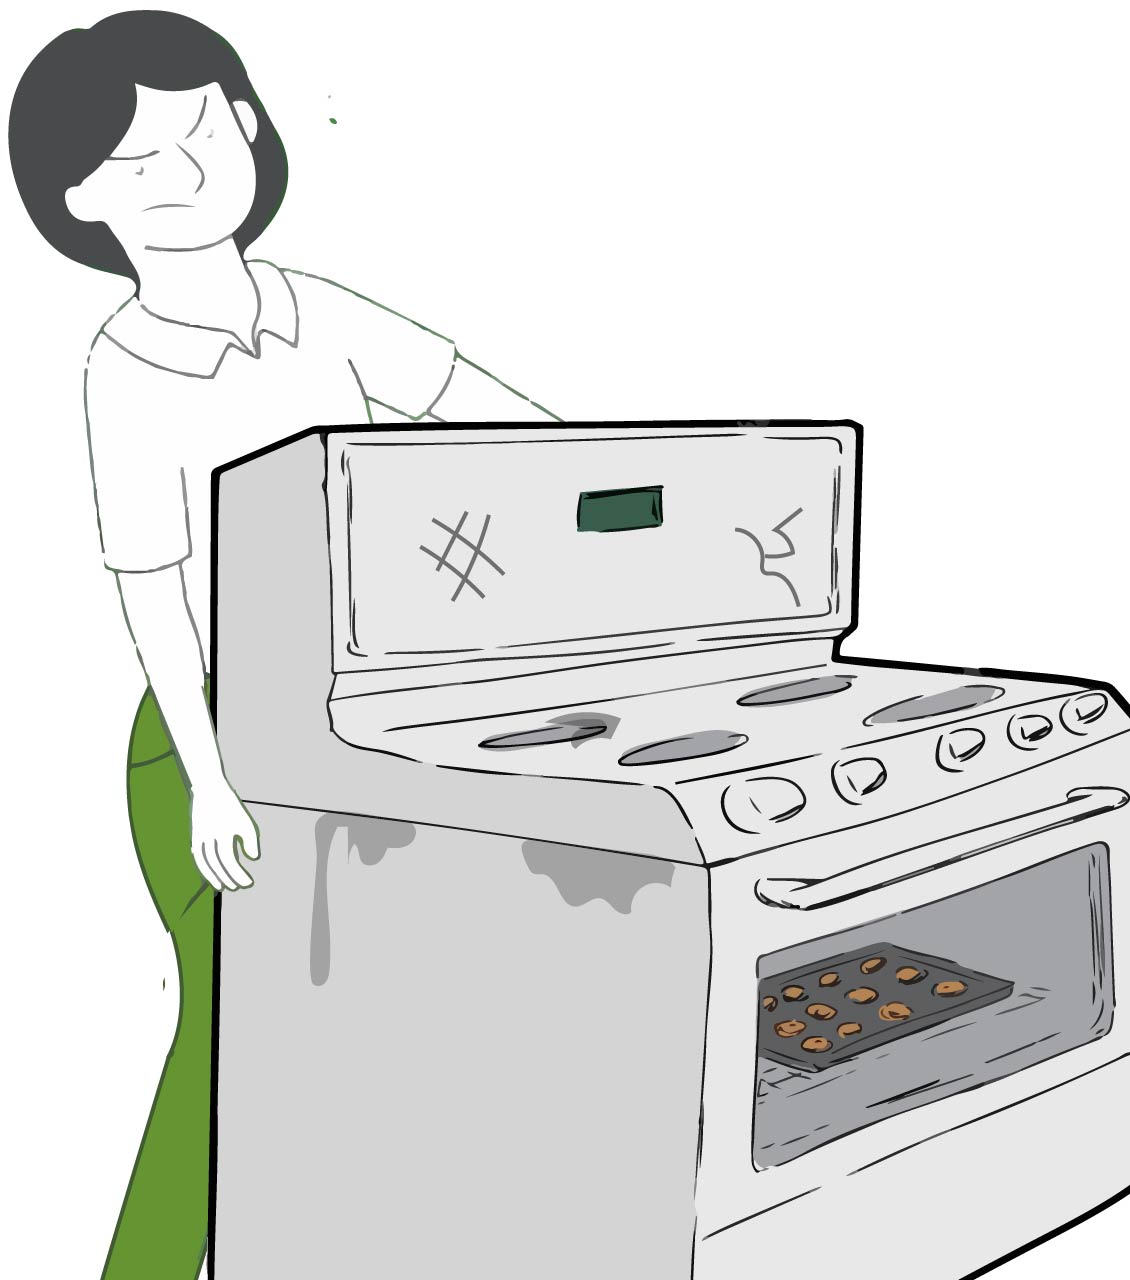 Denver oven removal services